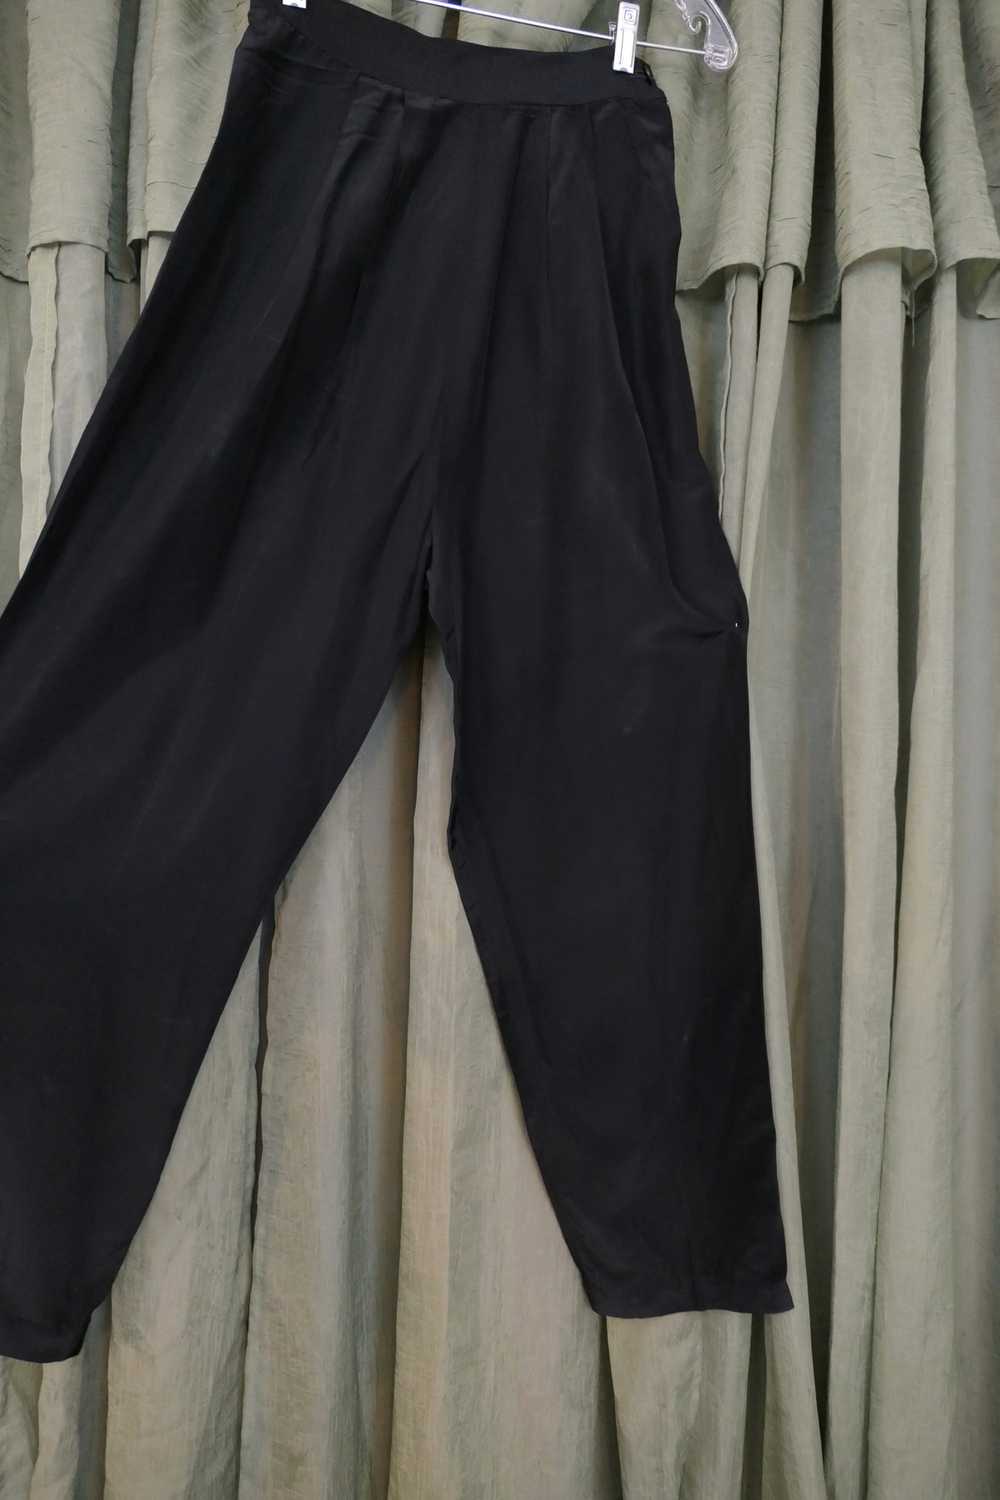 Vintage 1940s Black Rayon Pajamas Pants, 25 inch … - image 7